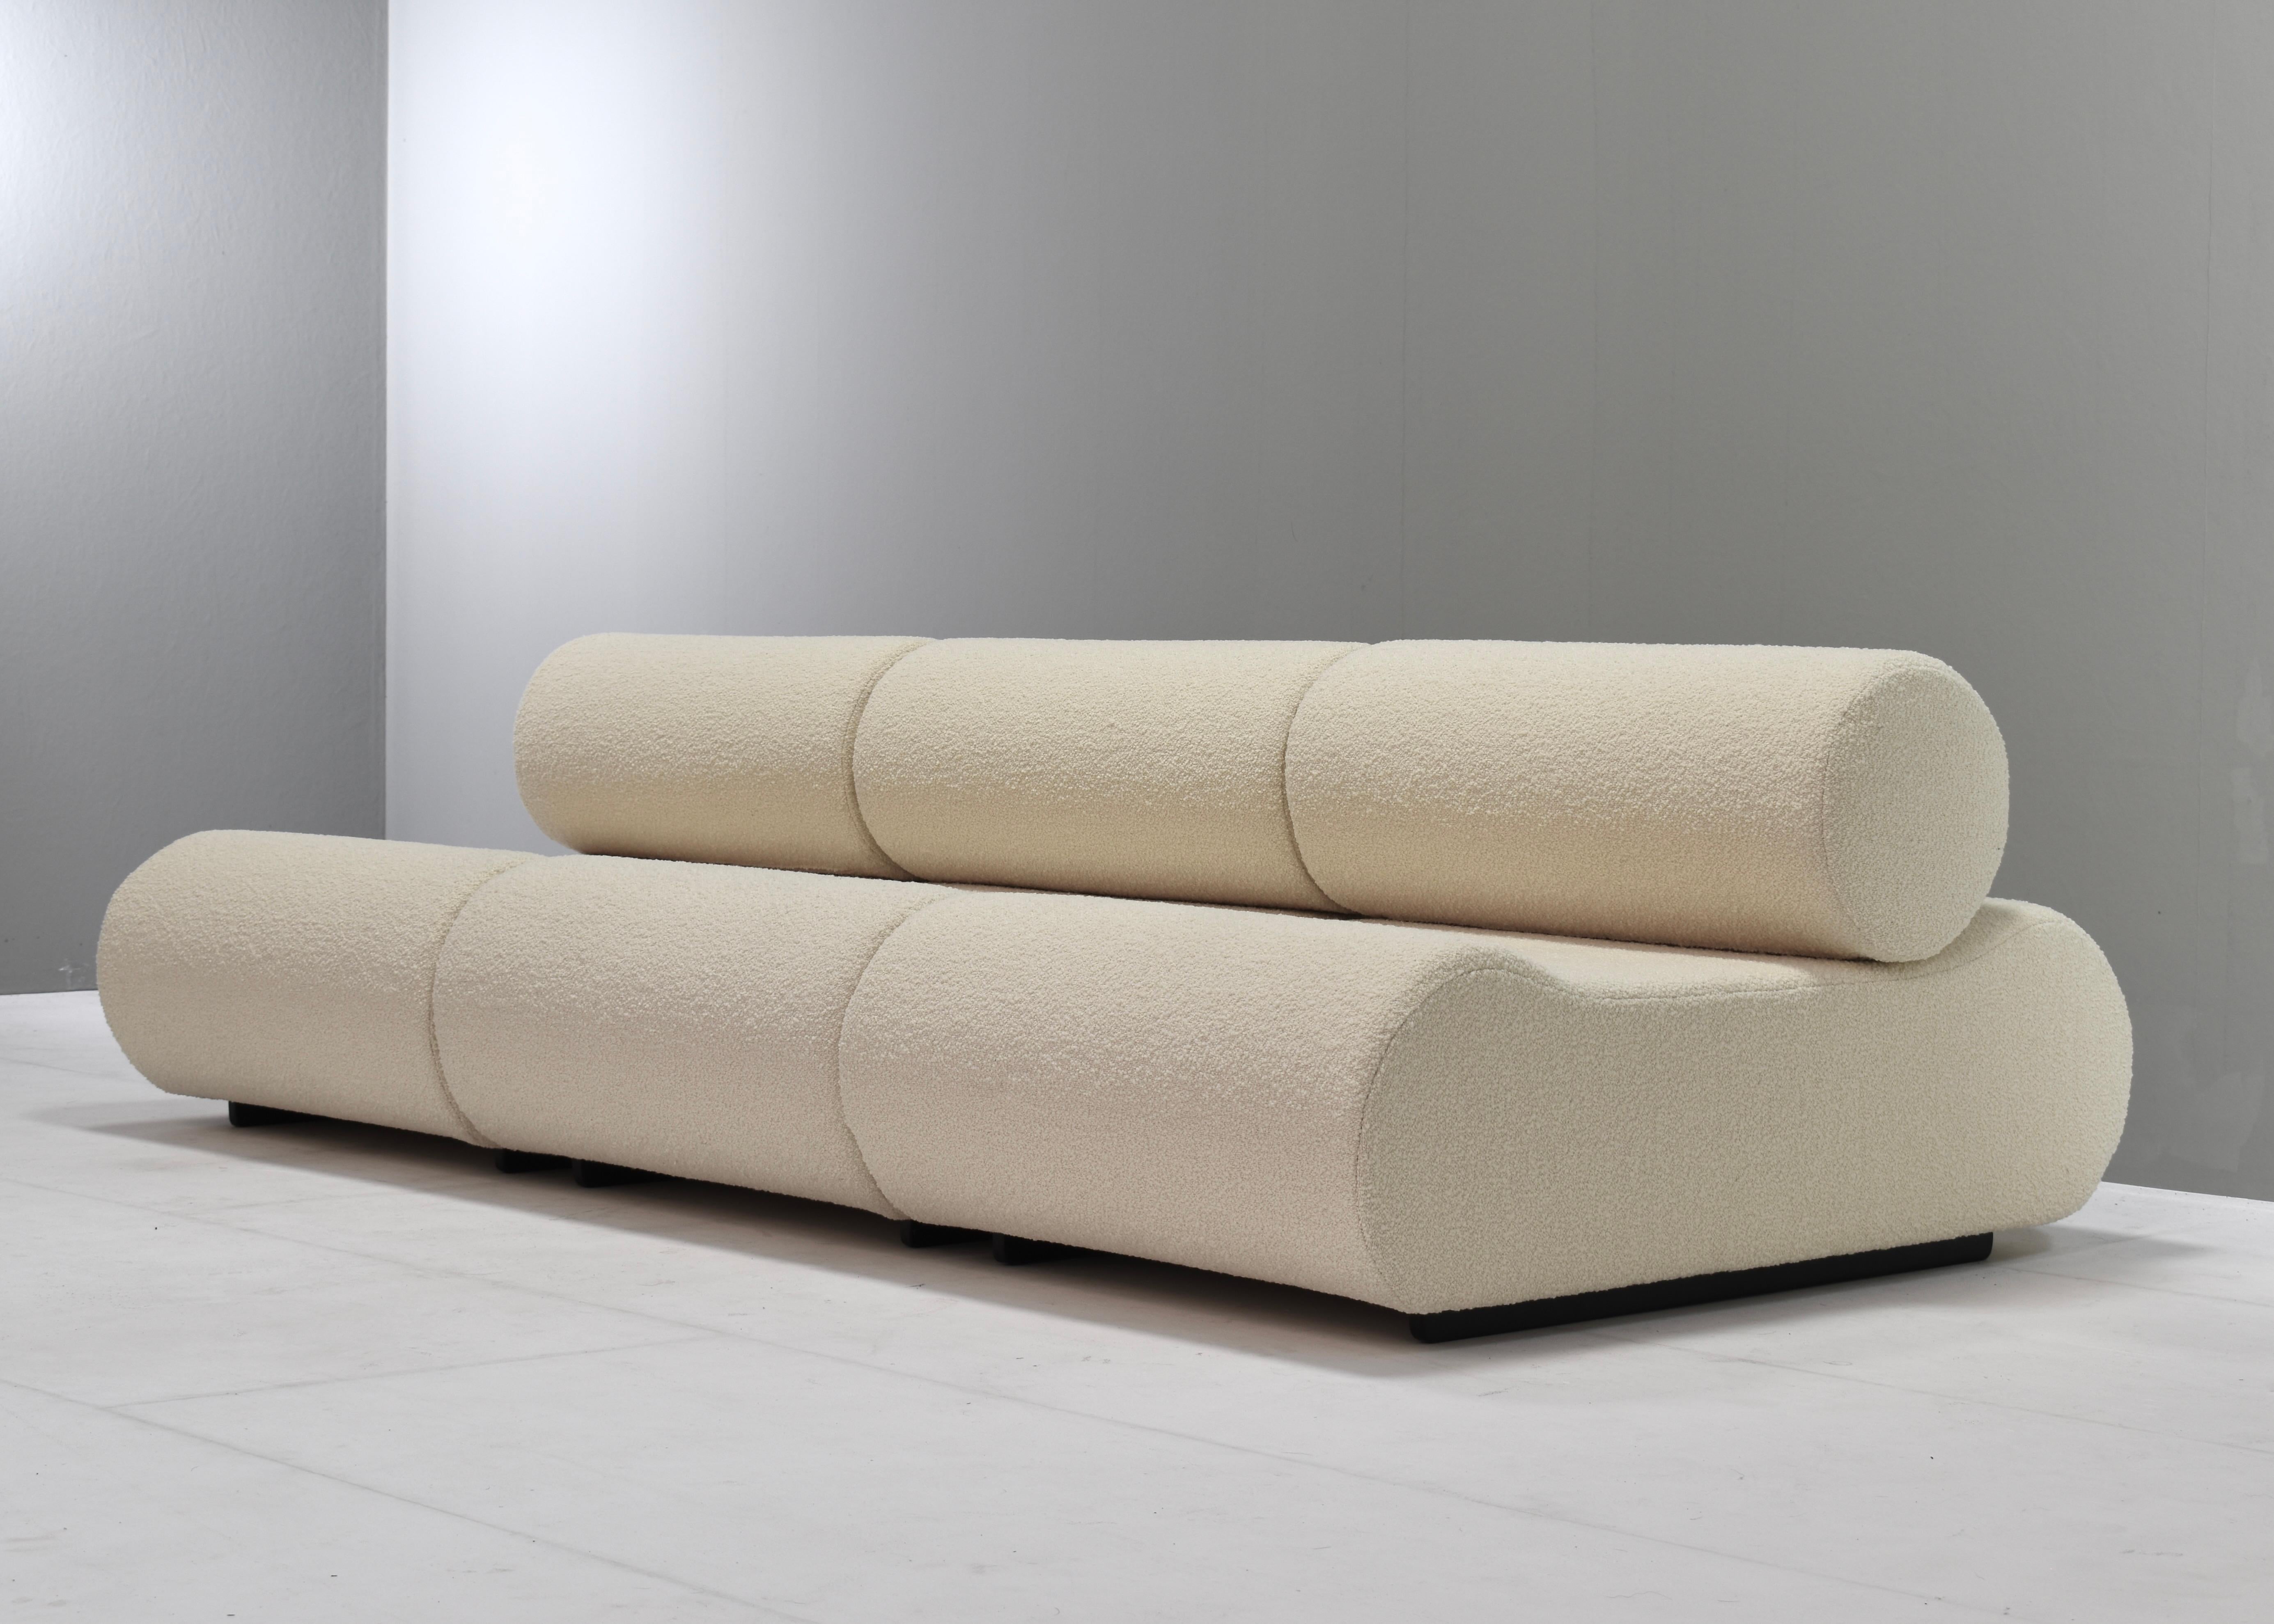 Mid-Century Modern Klaus Uredat ‘Corbi’ Sofa for COR, Germany – 1969 in New Bouclé Upholstery